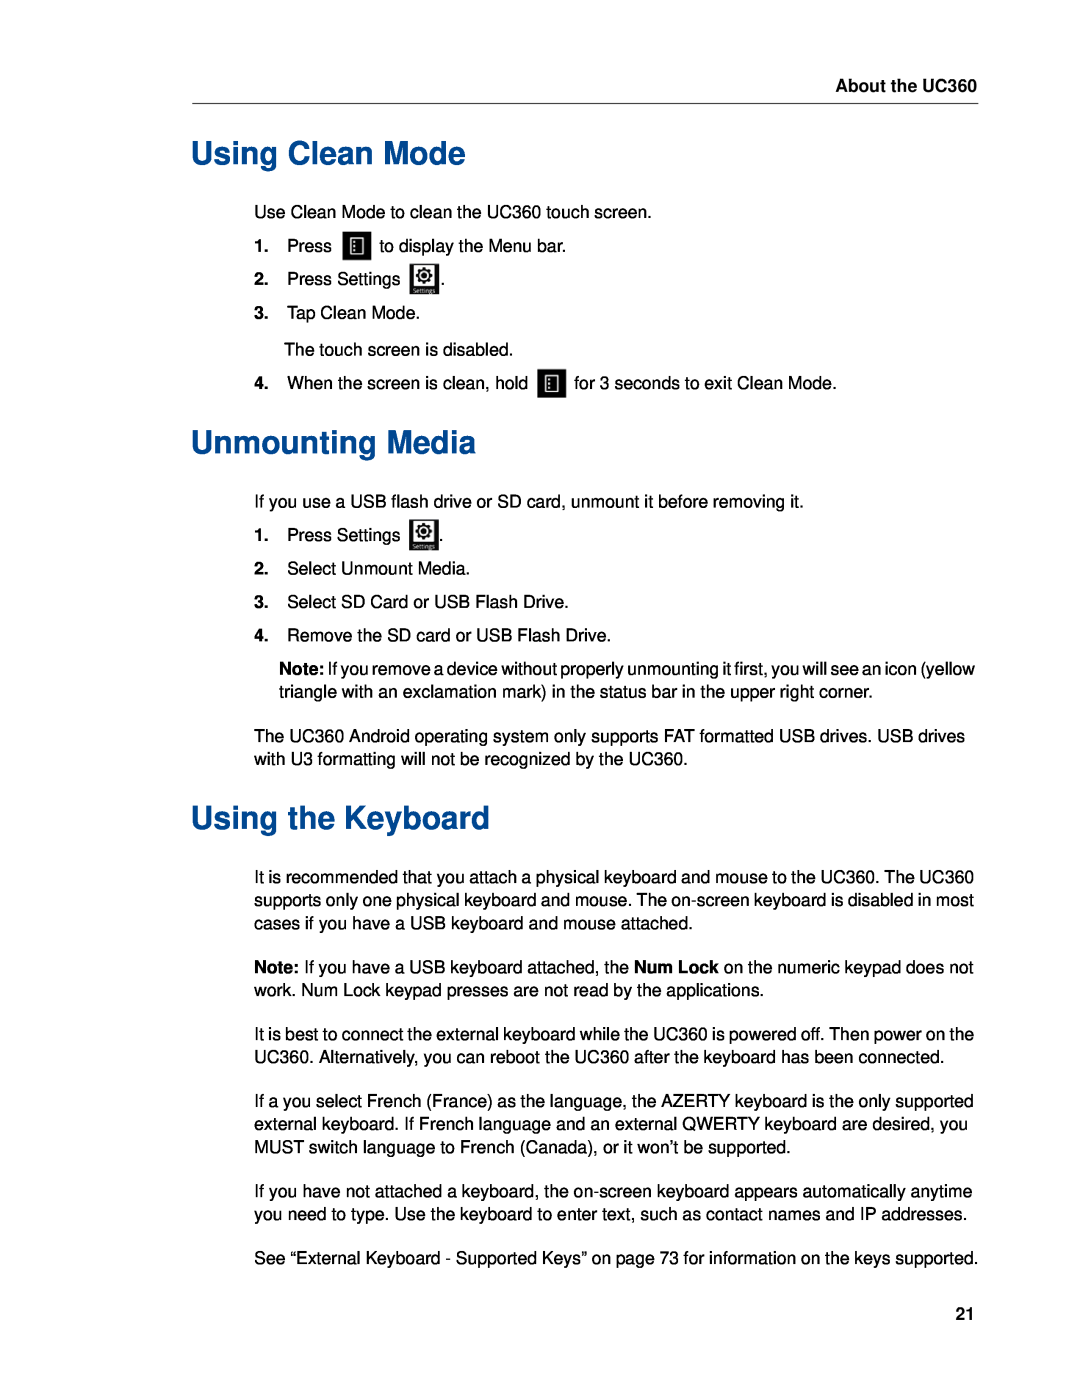 Mitel UC360 manual Using Clean Mode, Unmounting Media, Using the Keyboard 